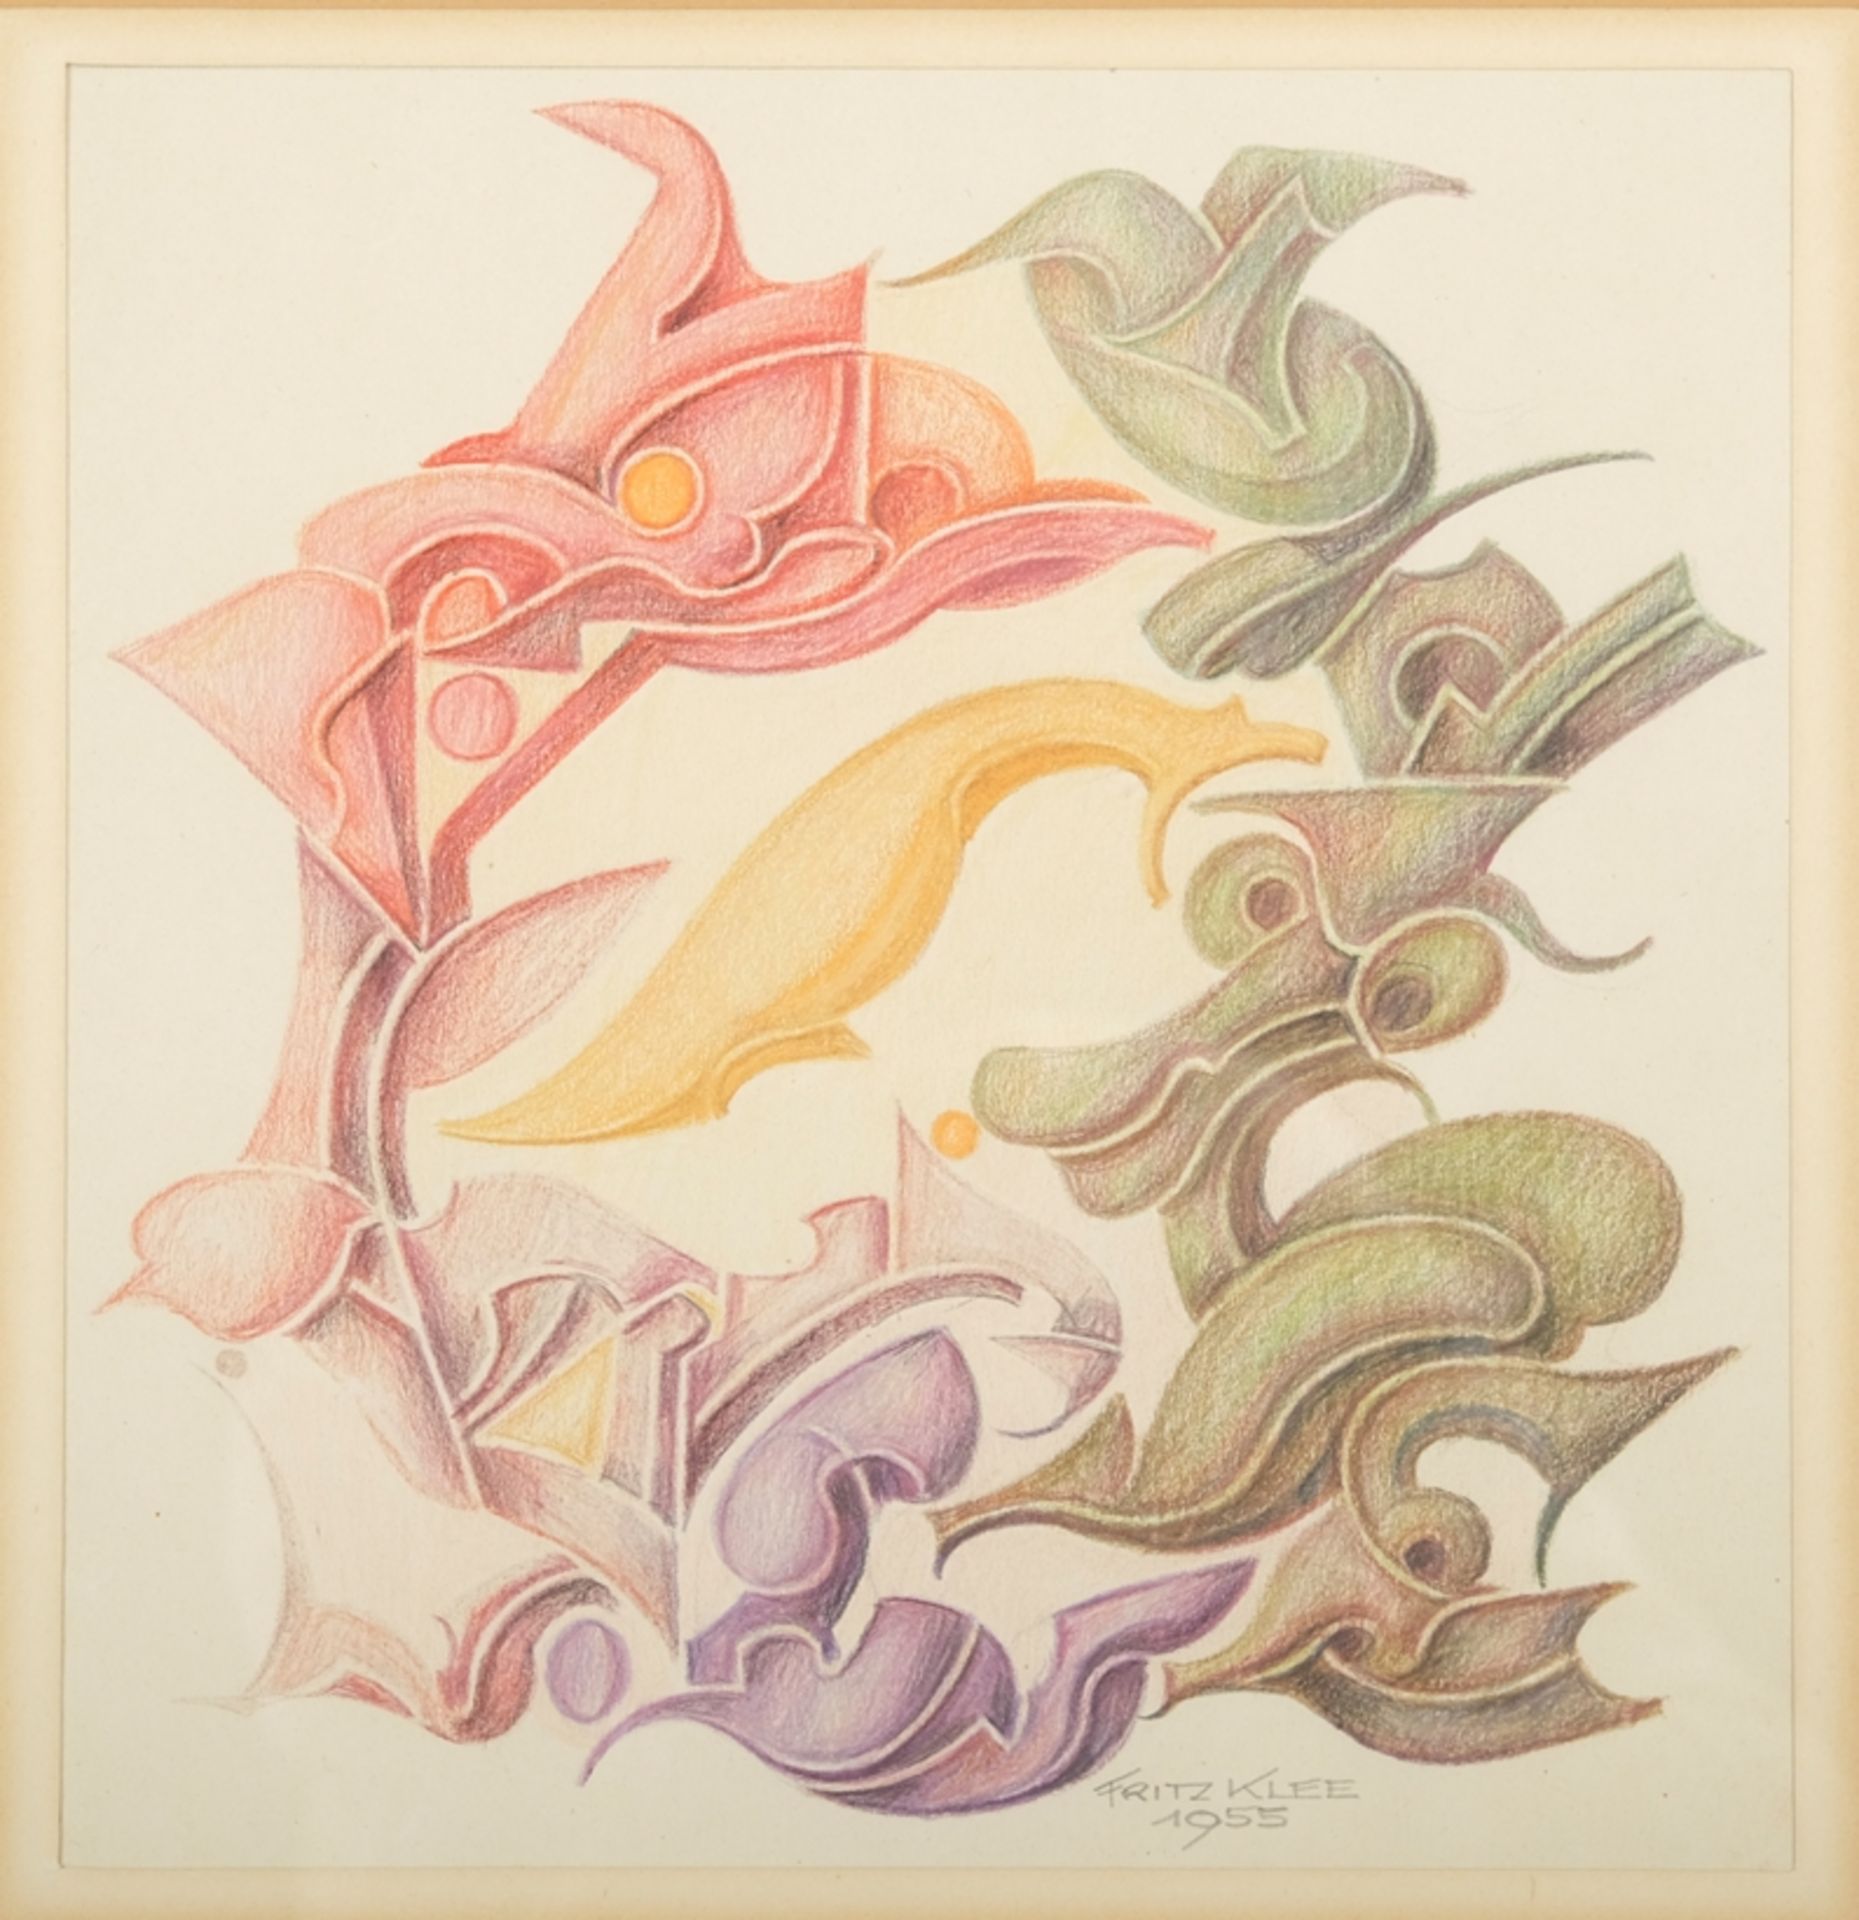 KLEE Fritz (um 1890 - Ende 20. Jahrhundert Stuttgart) "Abstrakt", organische Formen in bunten Farbe